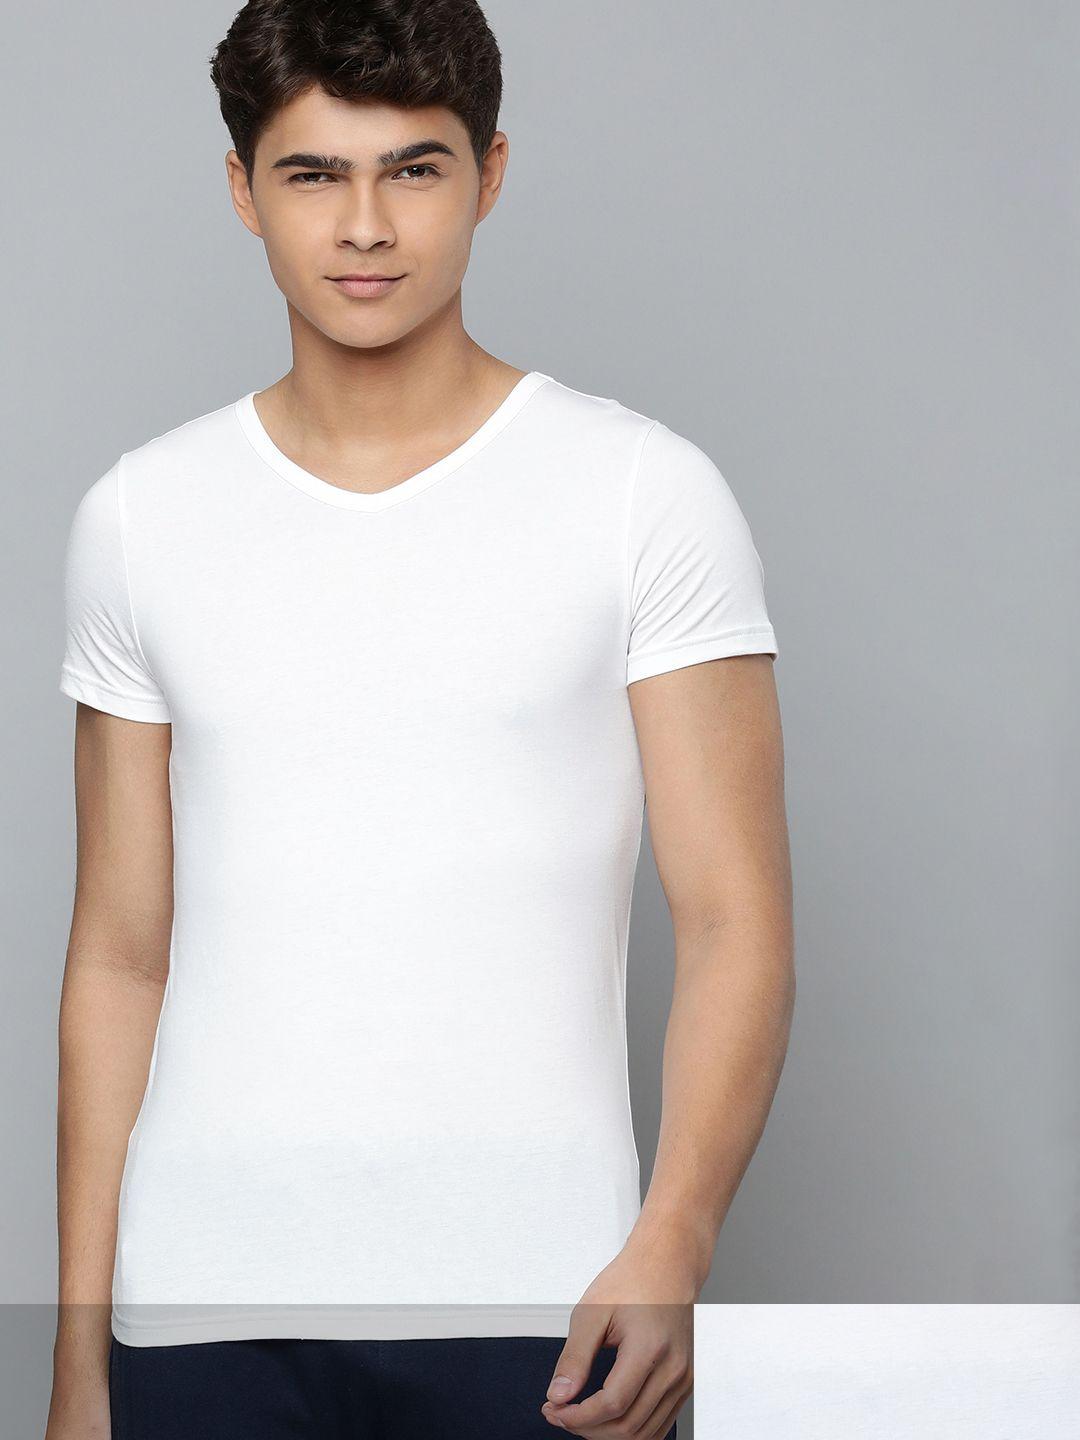 puma-men-white-v-neck-solid-pure-cotton-t-shirt-pack-of-2